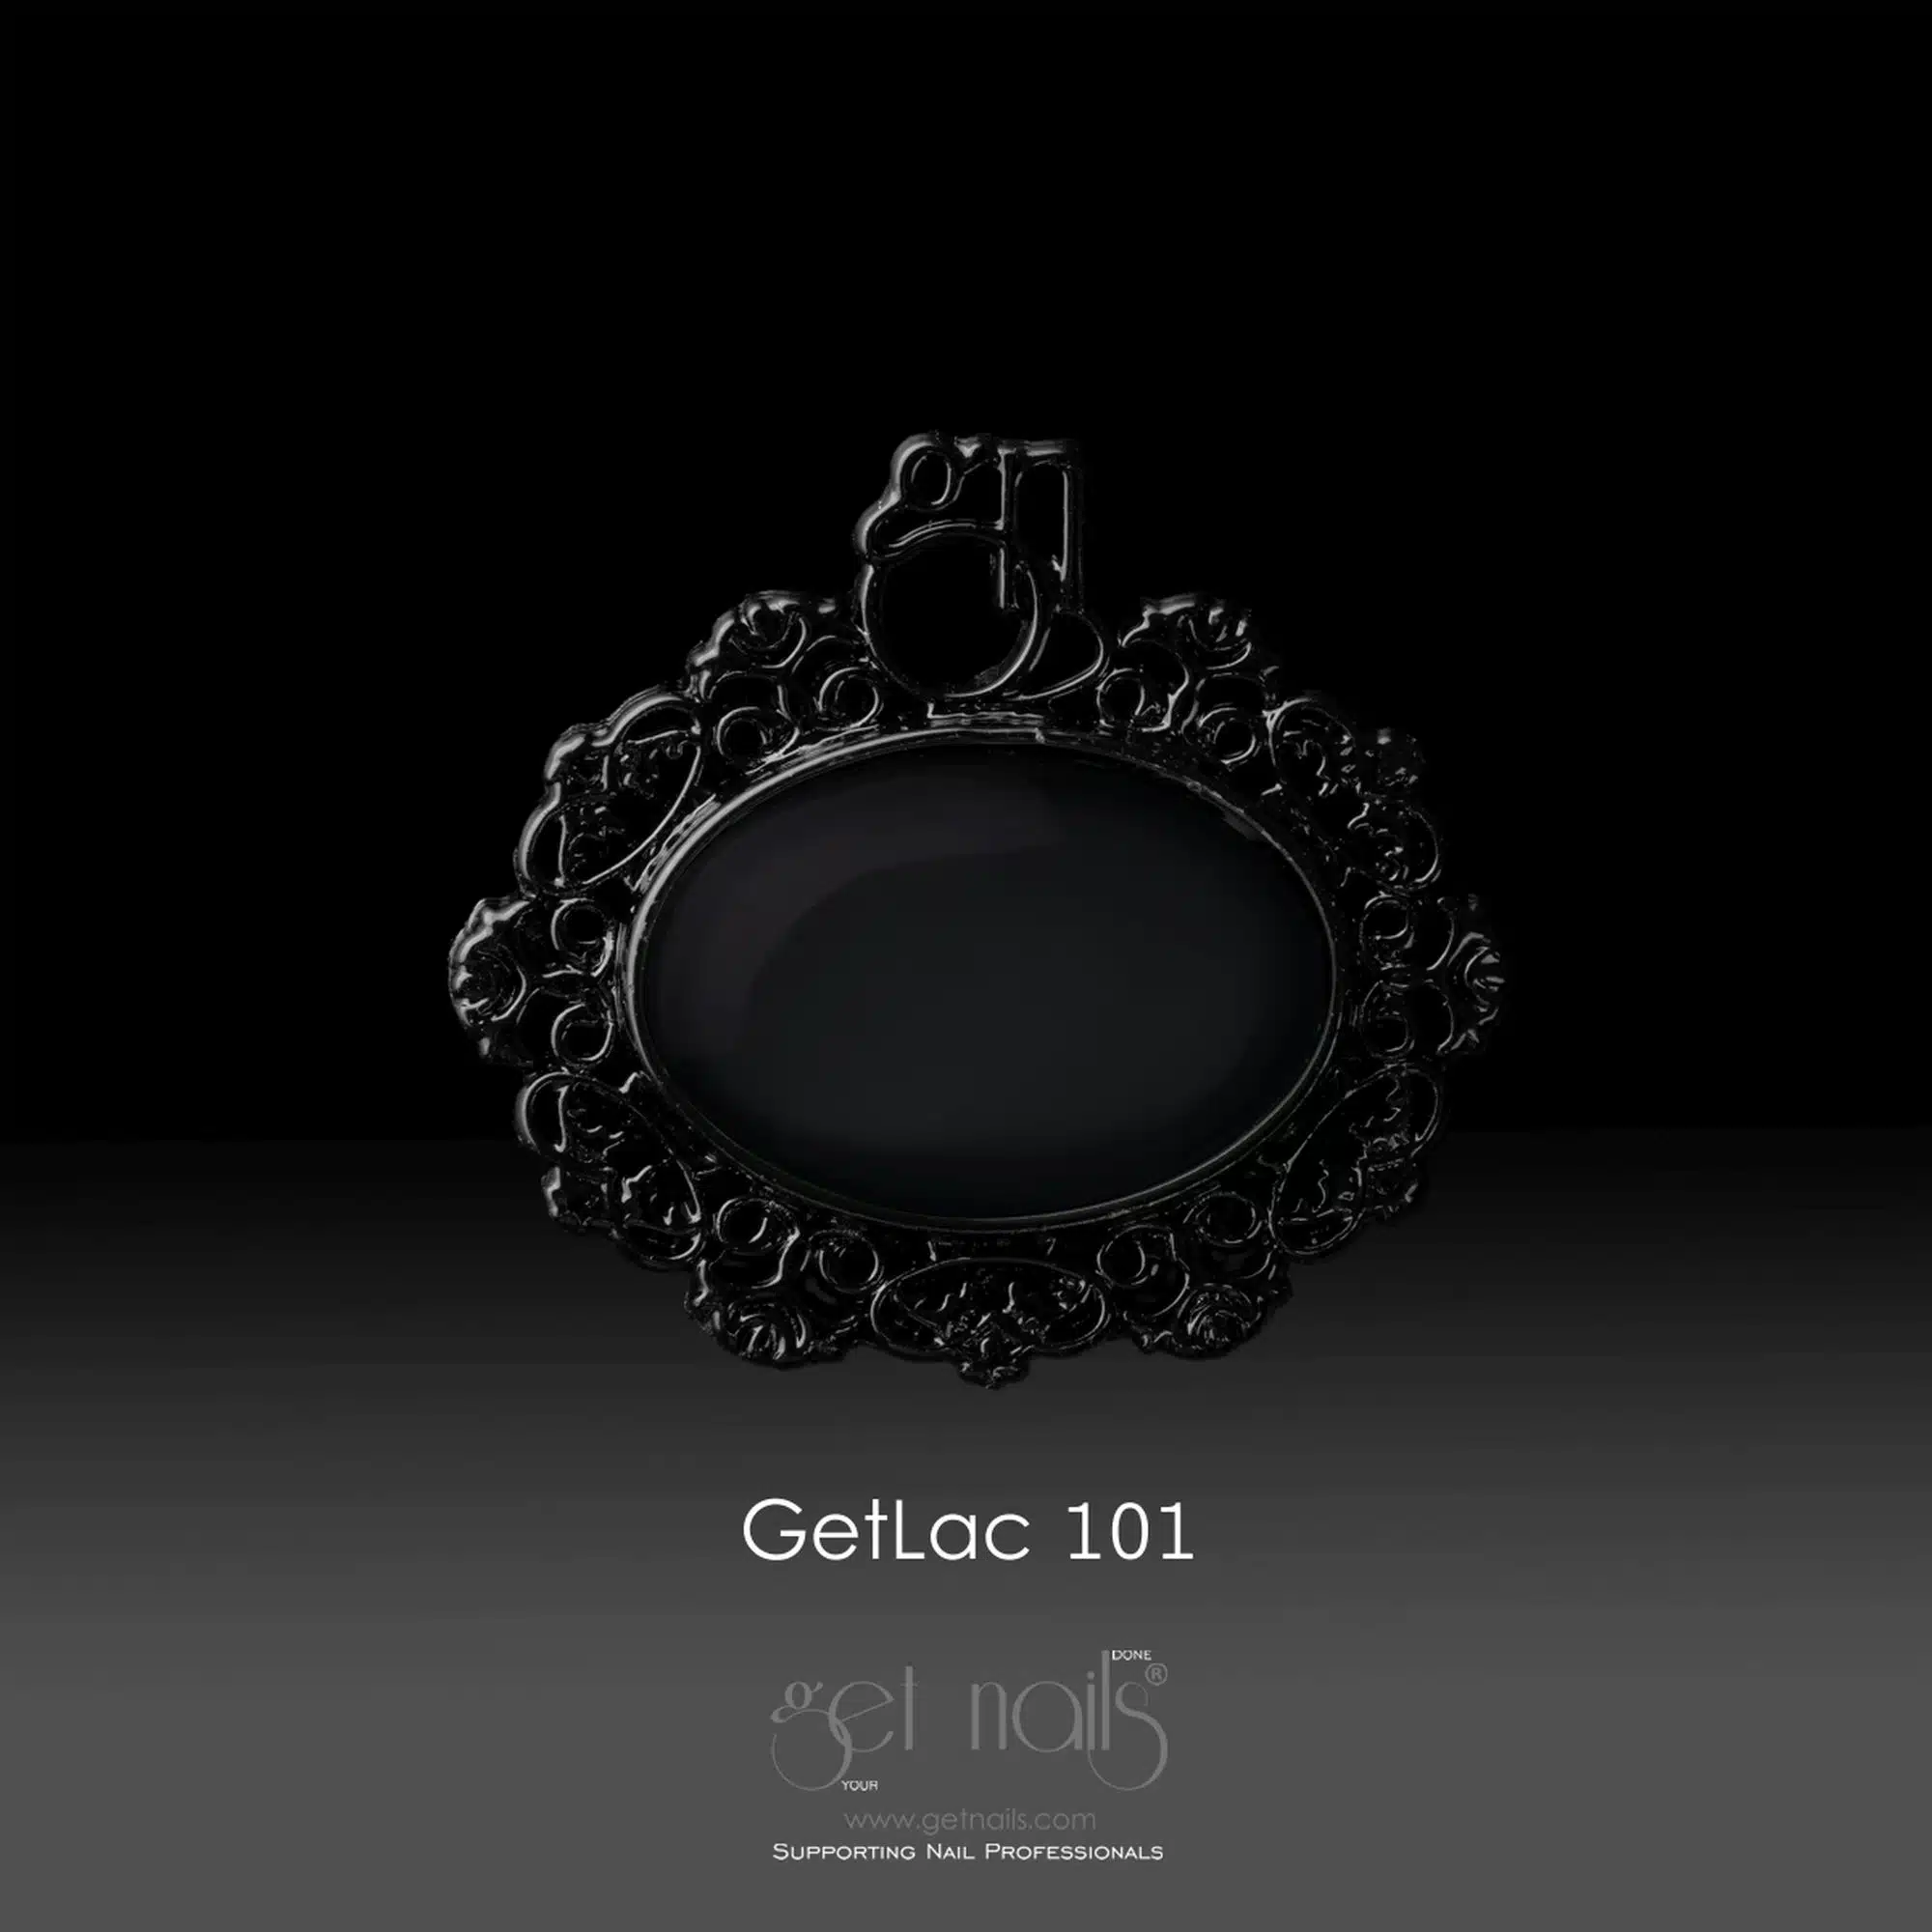 Get Nails Austria - GetLac 101 Black 15g